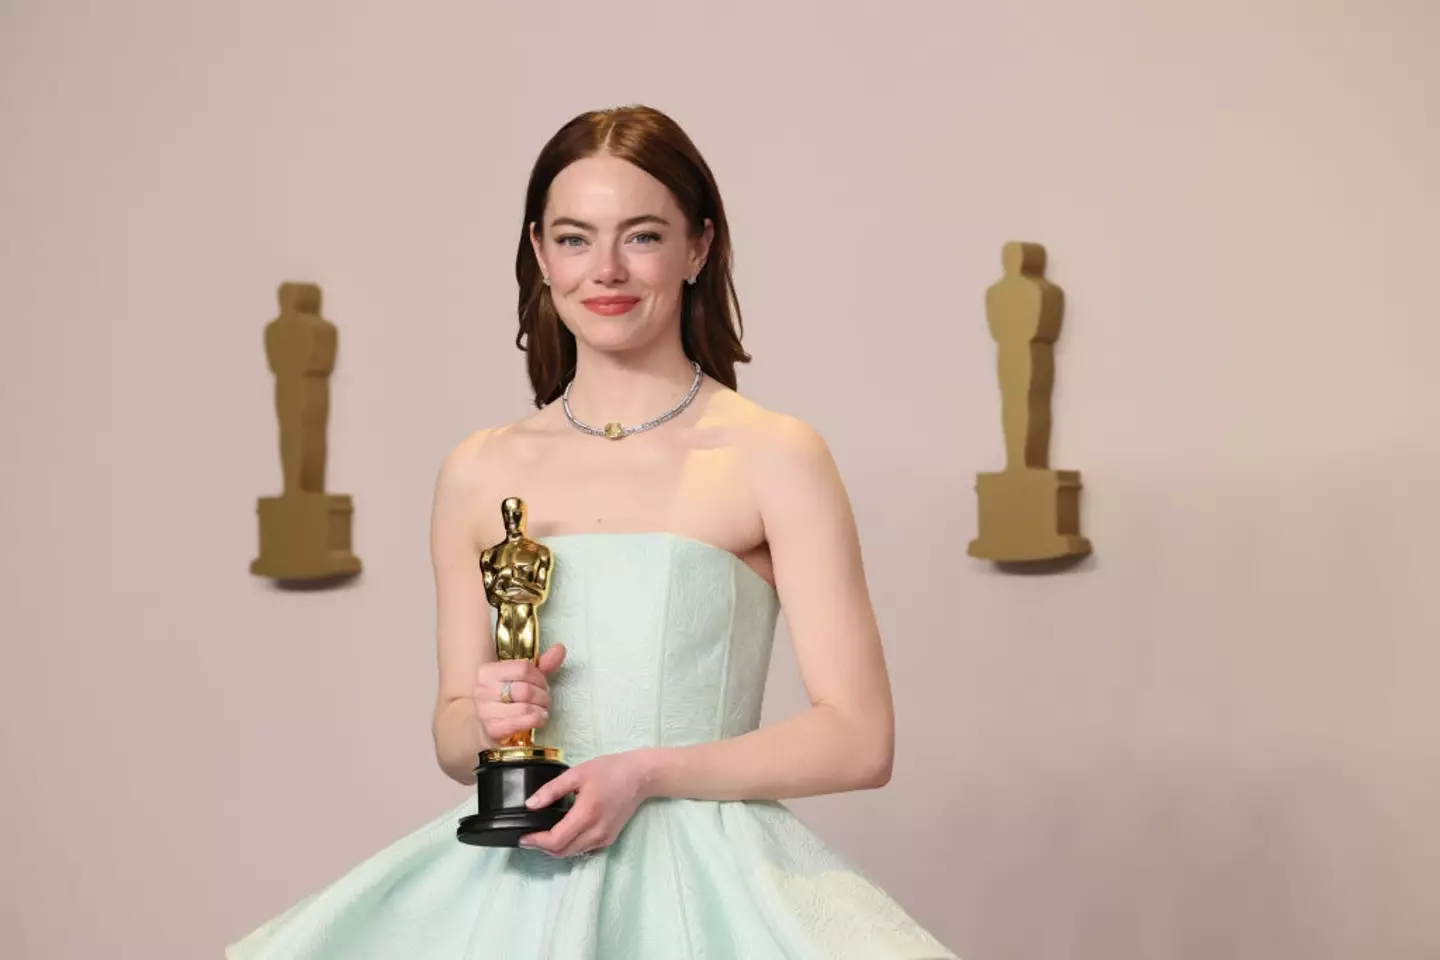 Emma won the Oscar for Best Actress.